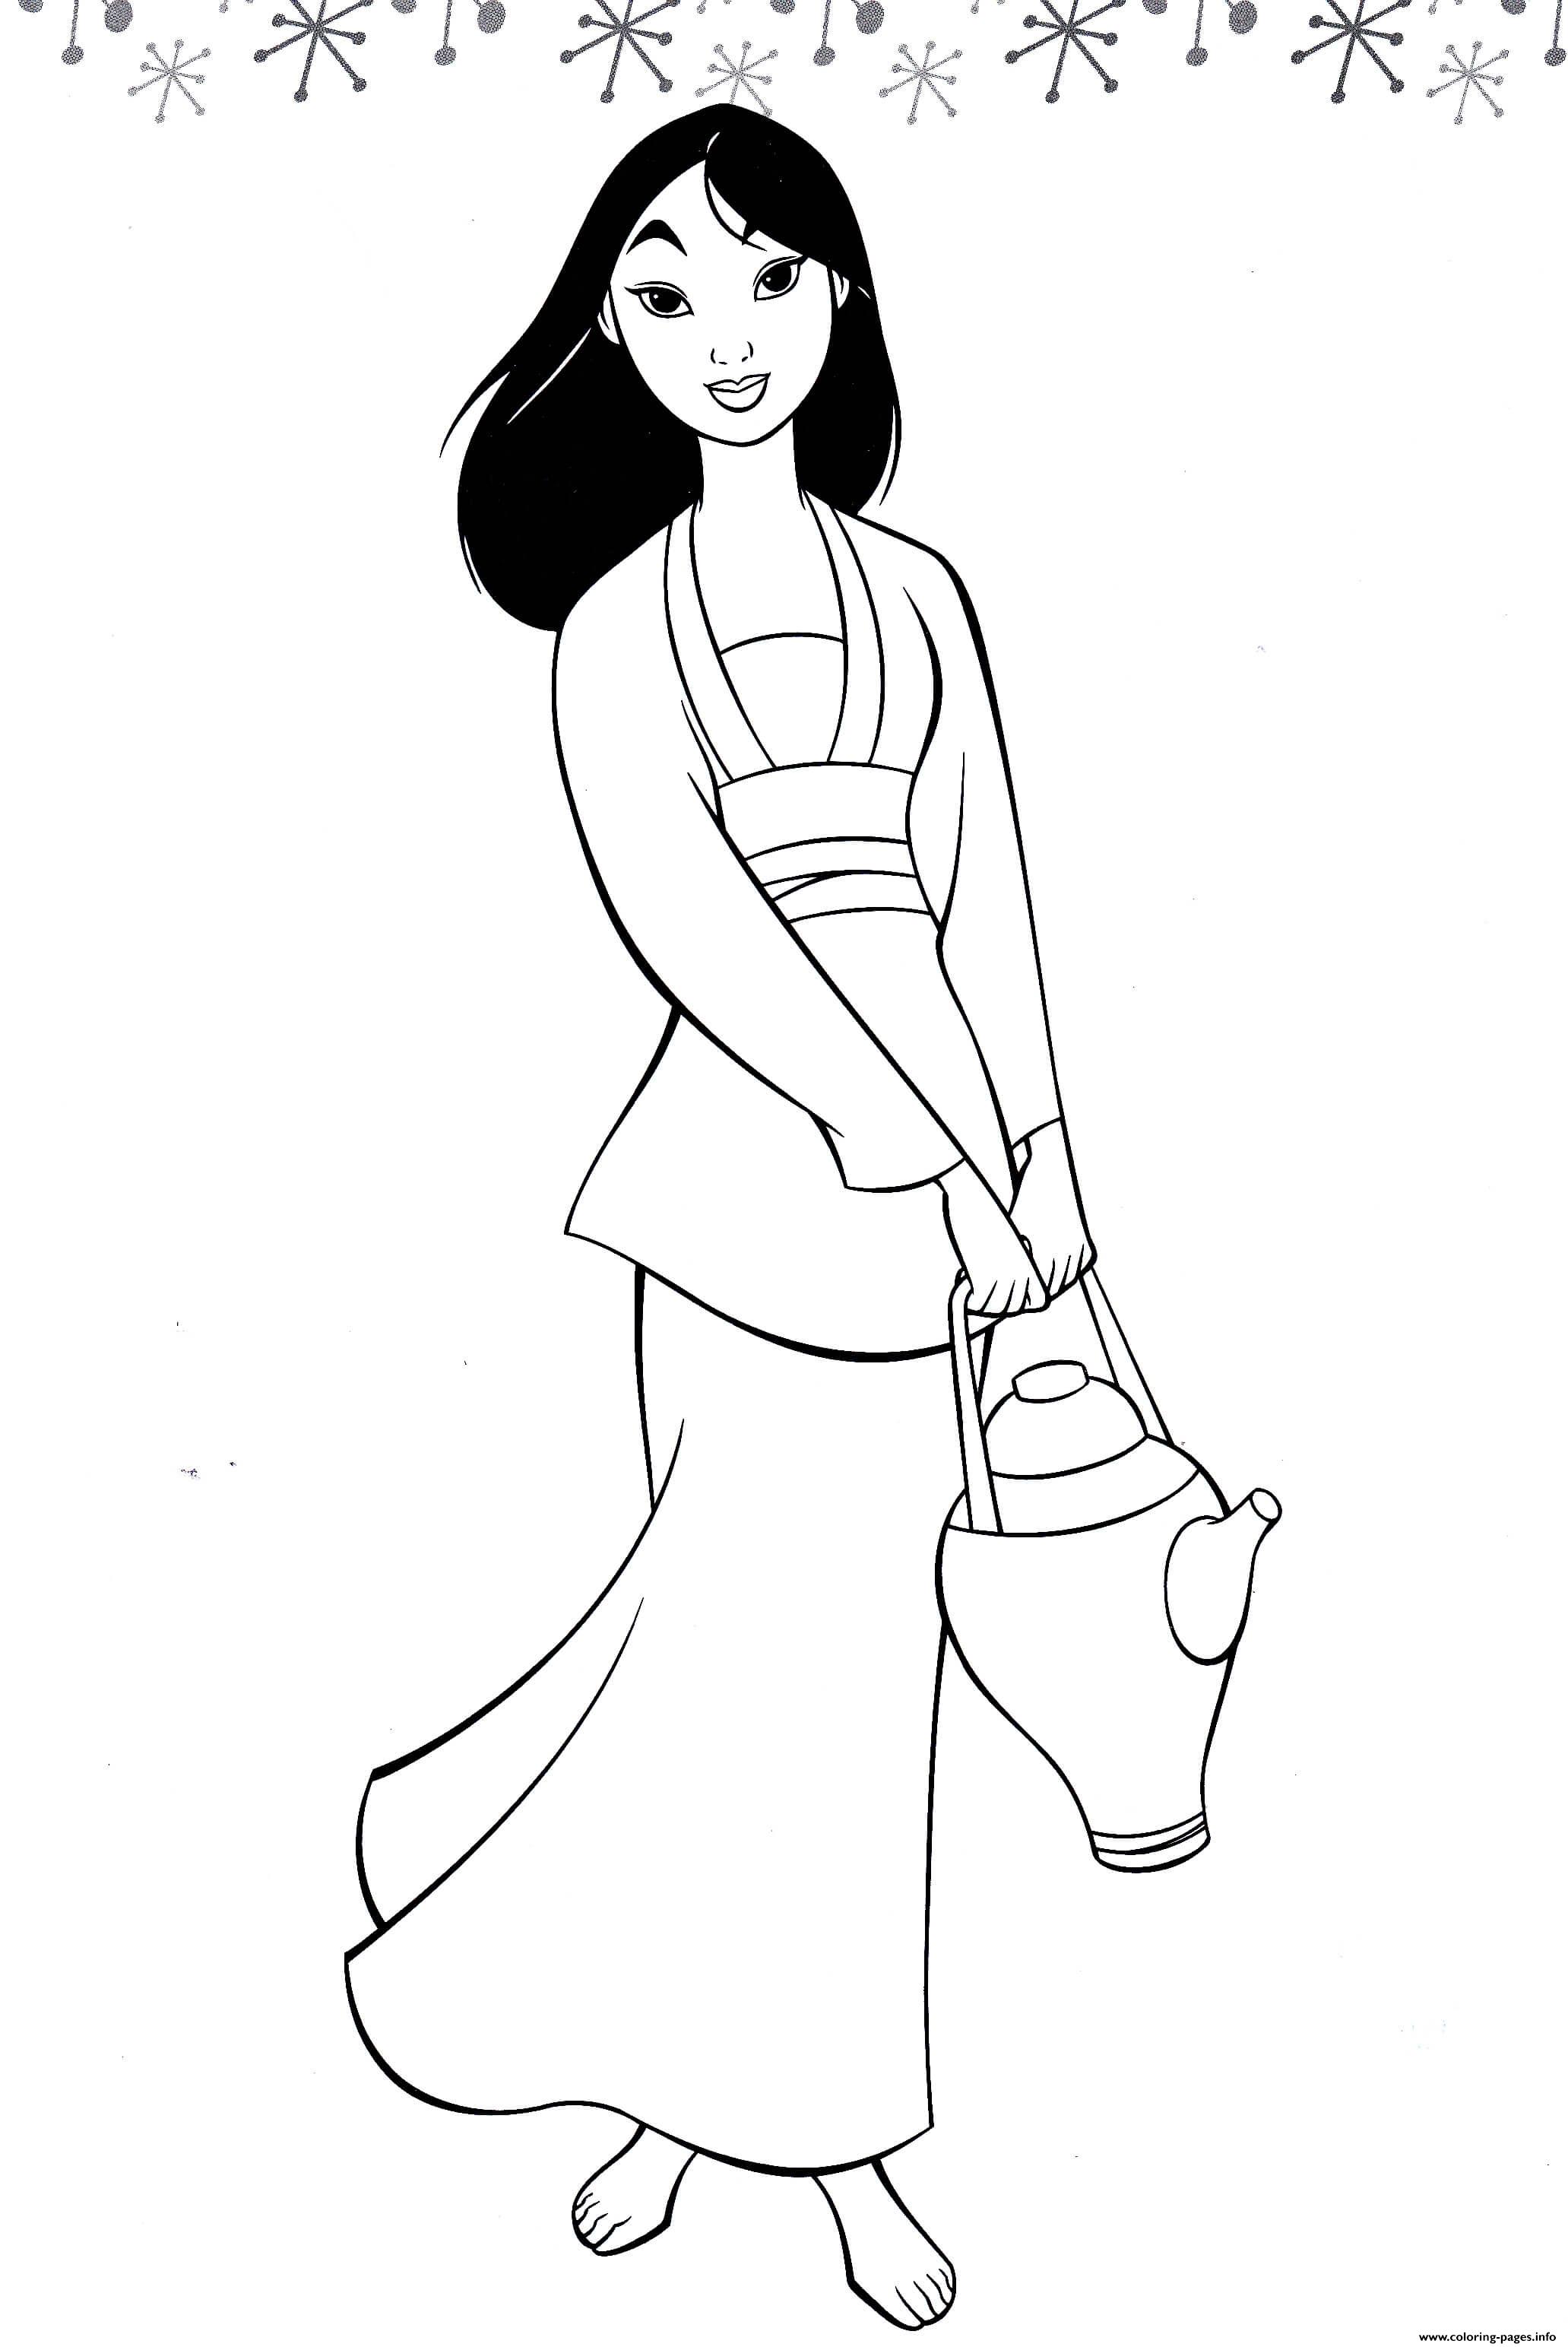 Princess Mulan coloring